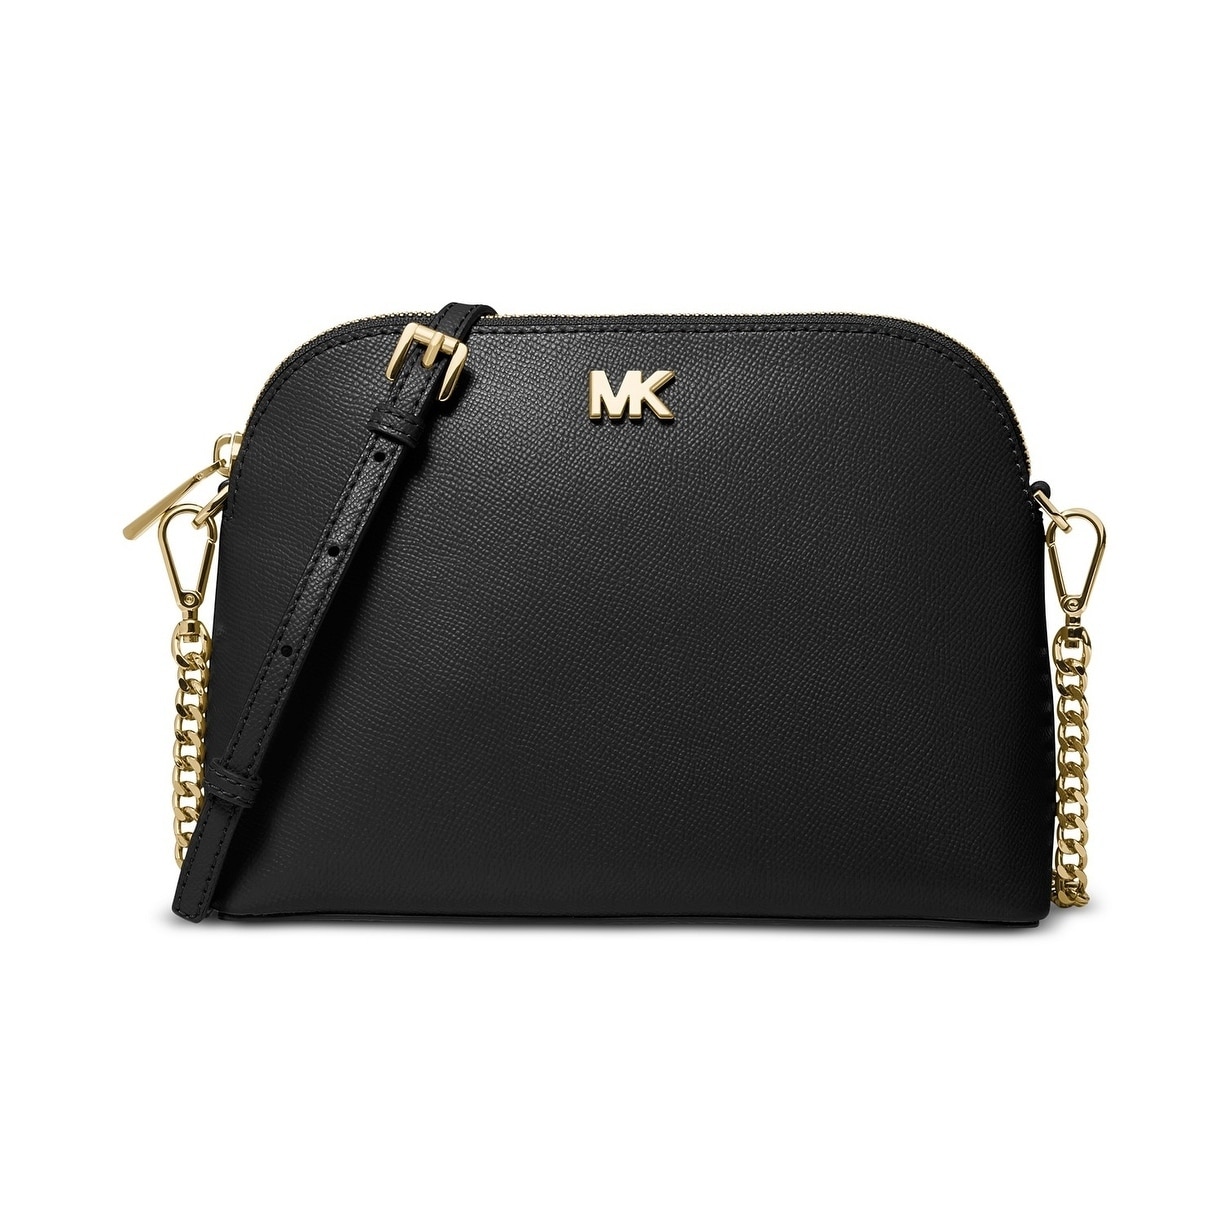 black and gold michael kors purse